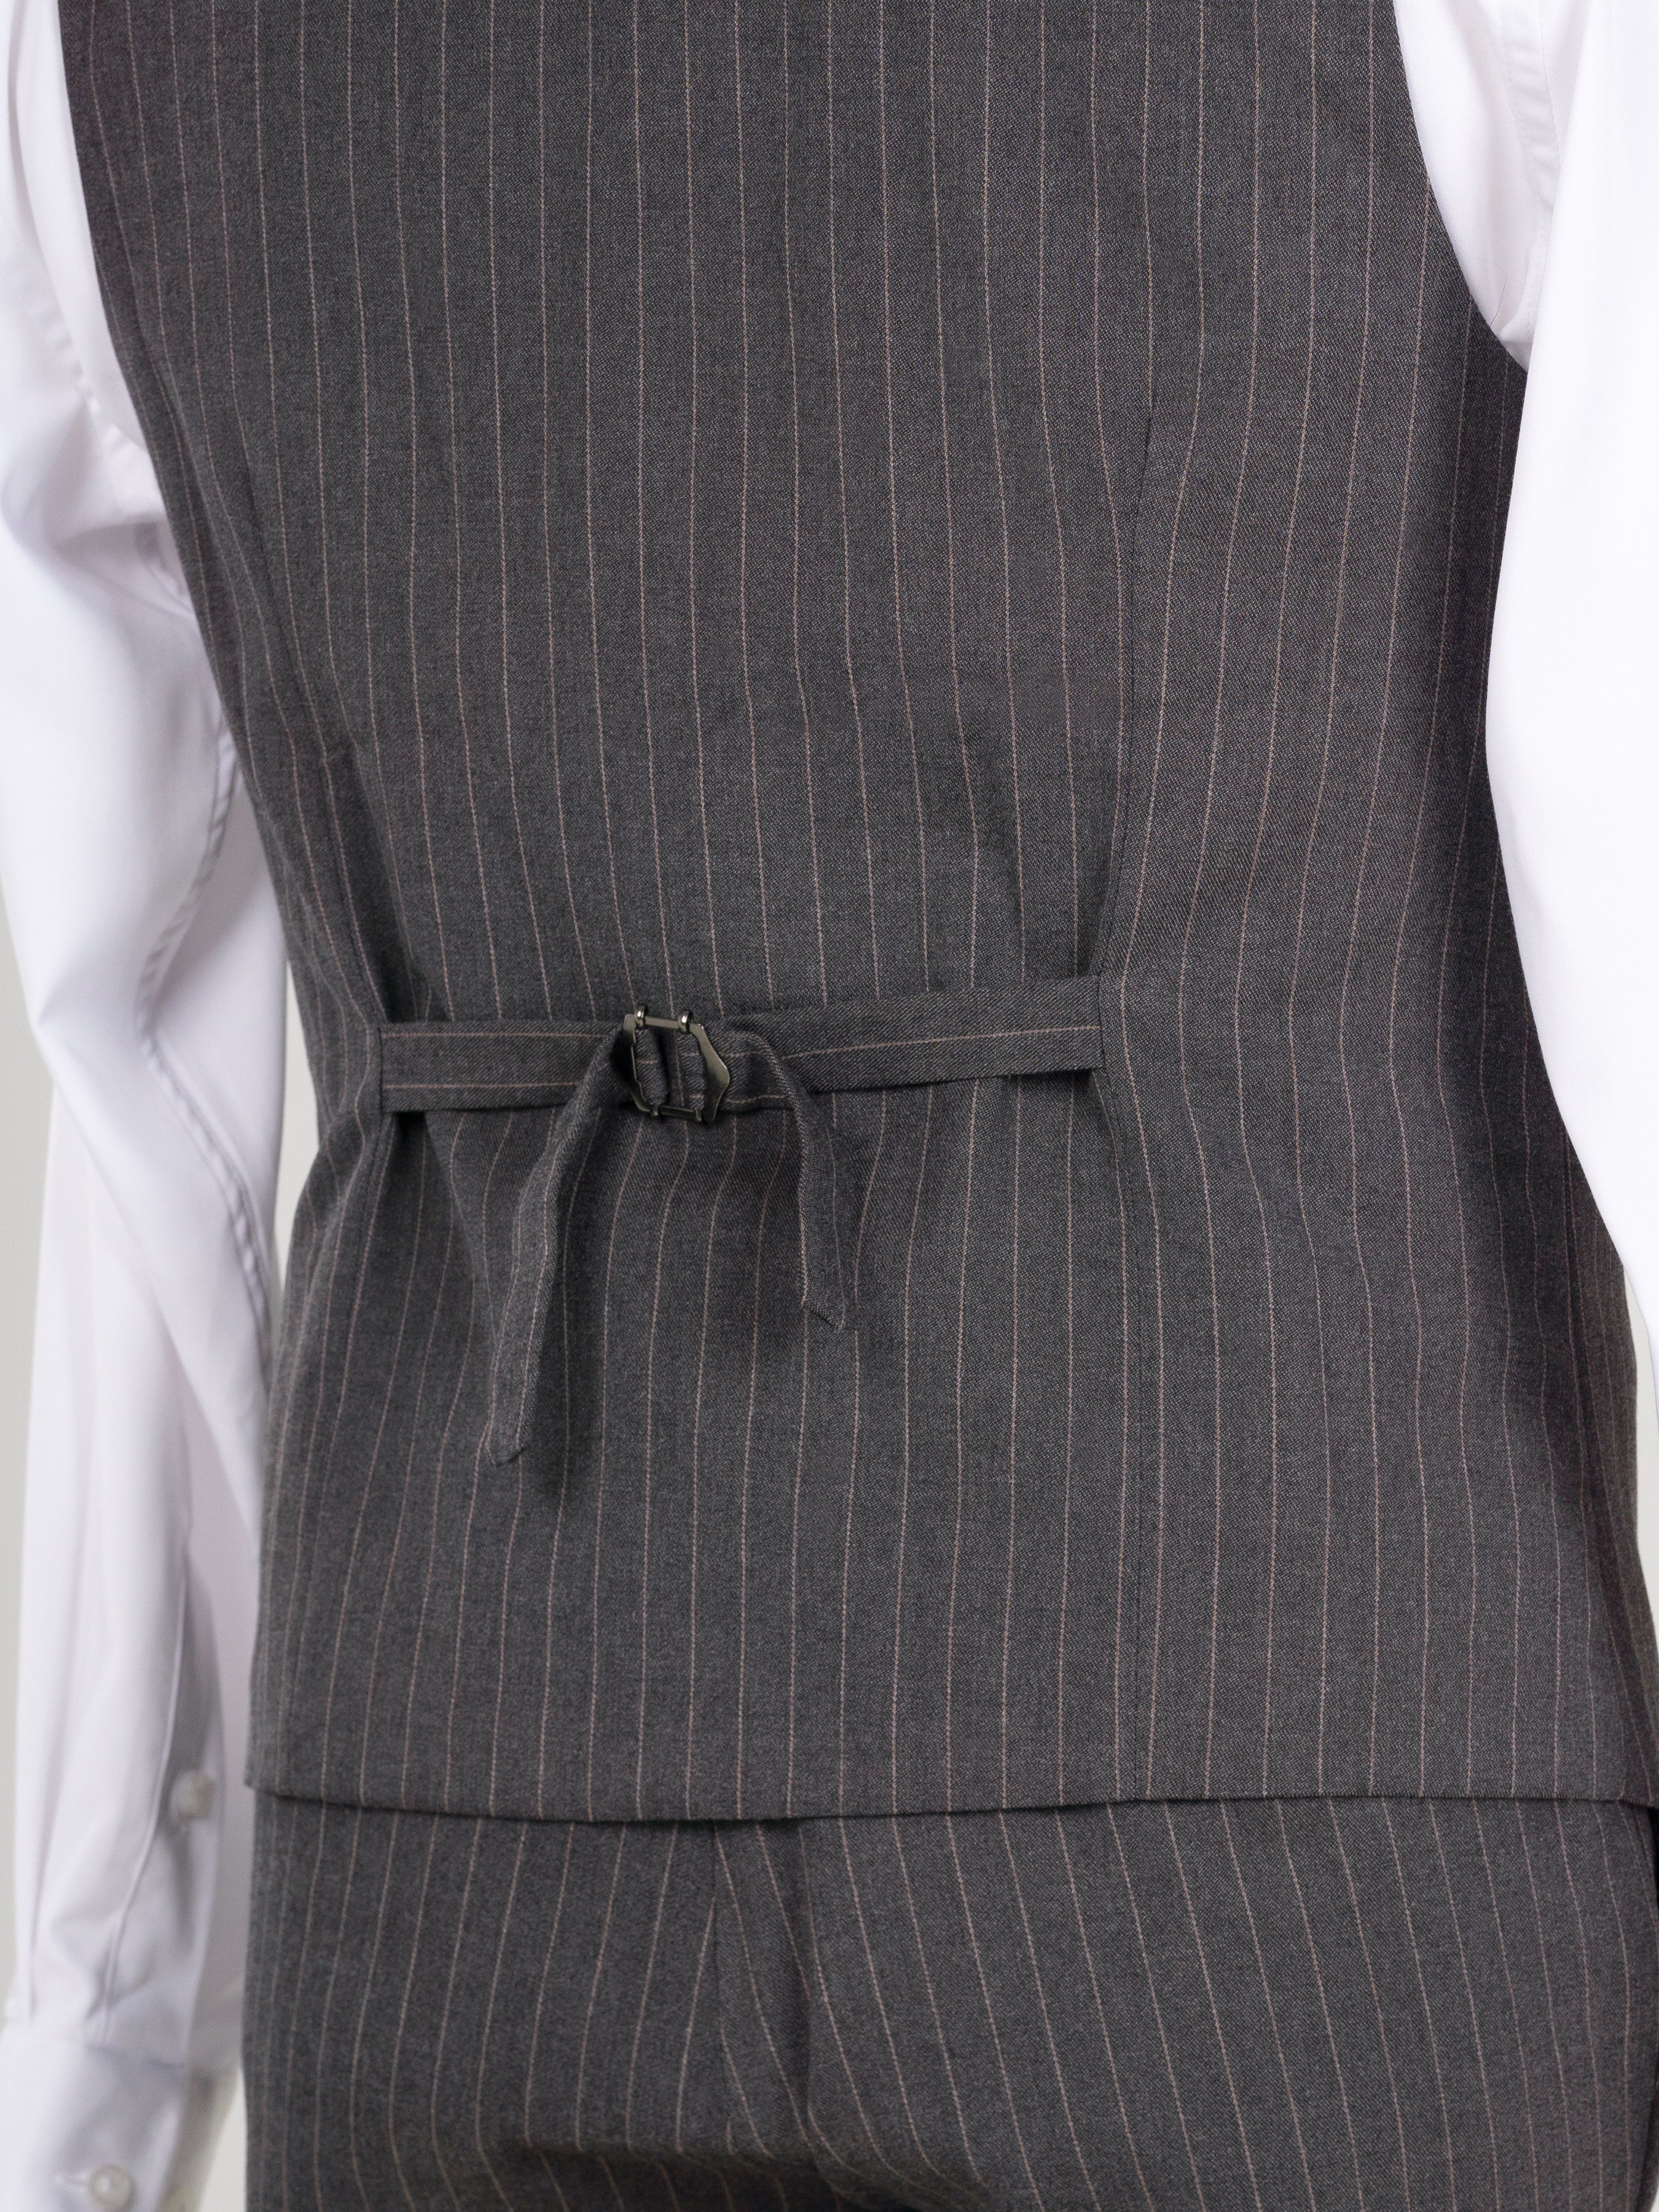 Vest - Dark Grey with Brown Pinstripes